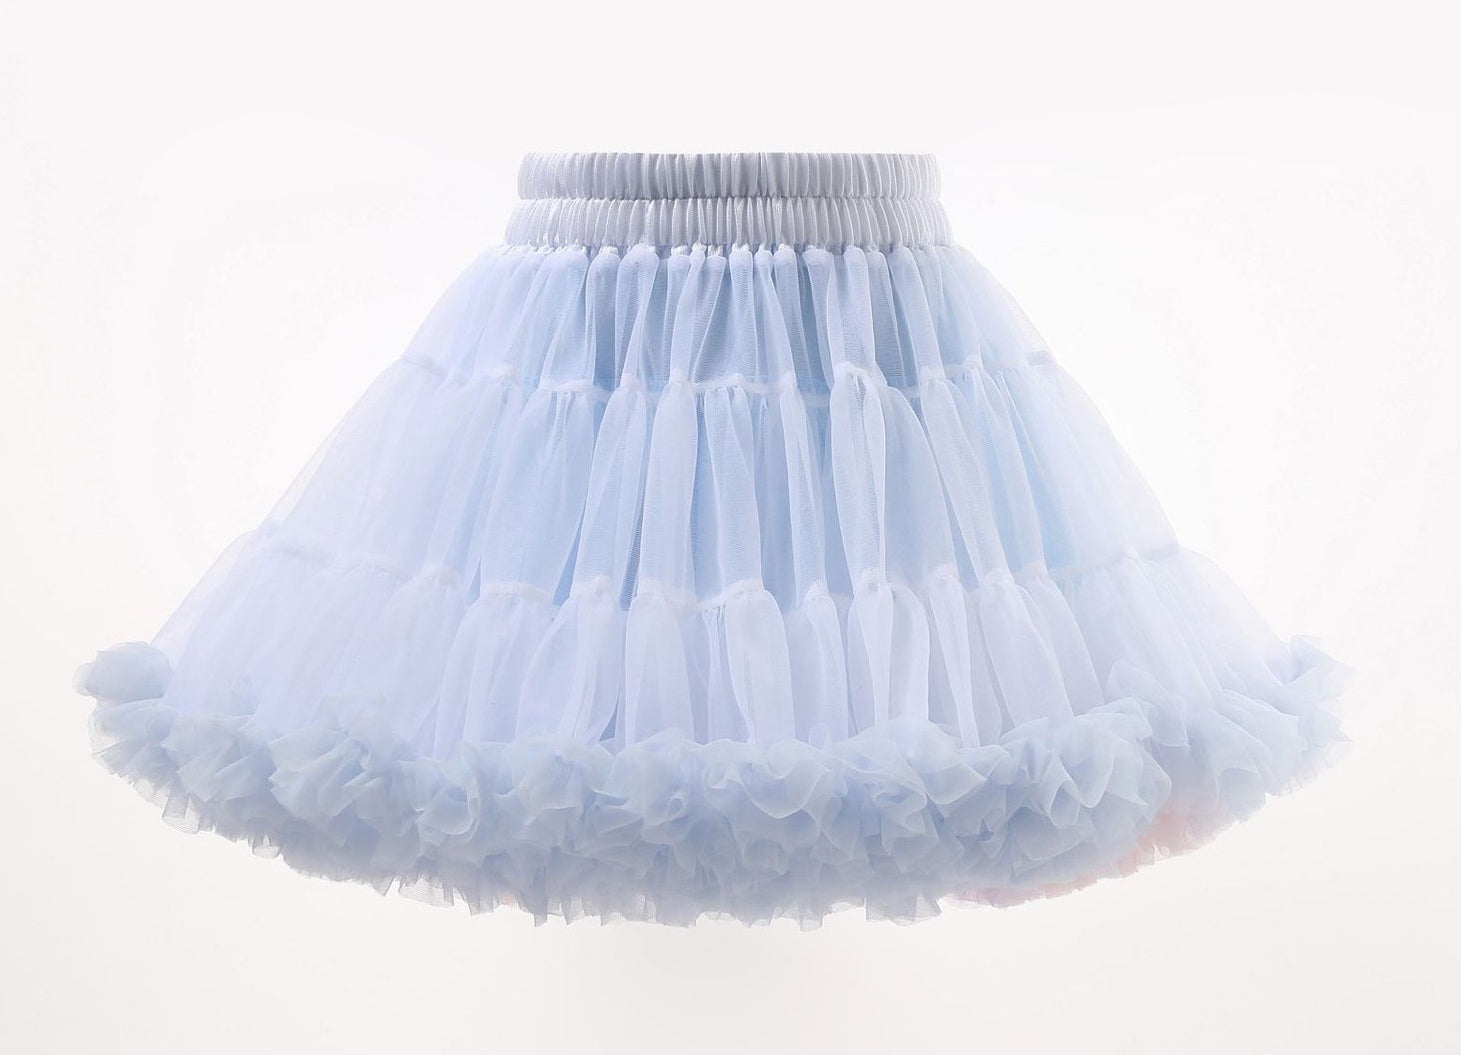 Girls Tutu Skirt Two Sides Double Fluffy Frozen Rainbow Light Blue